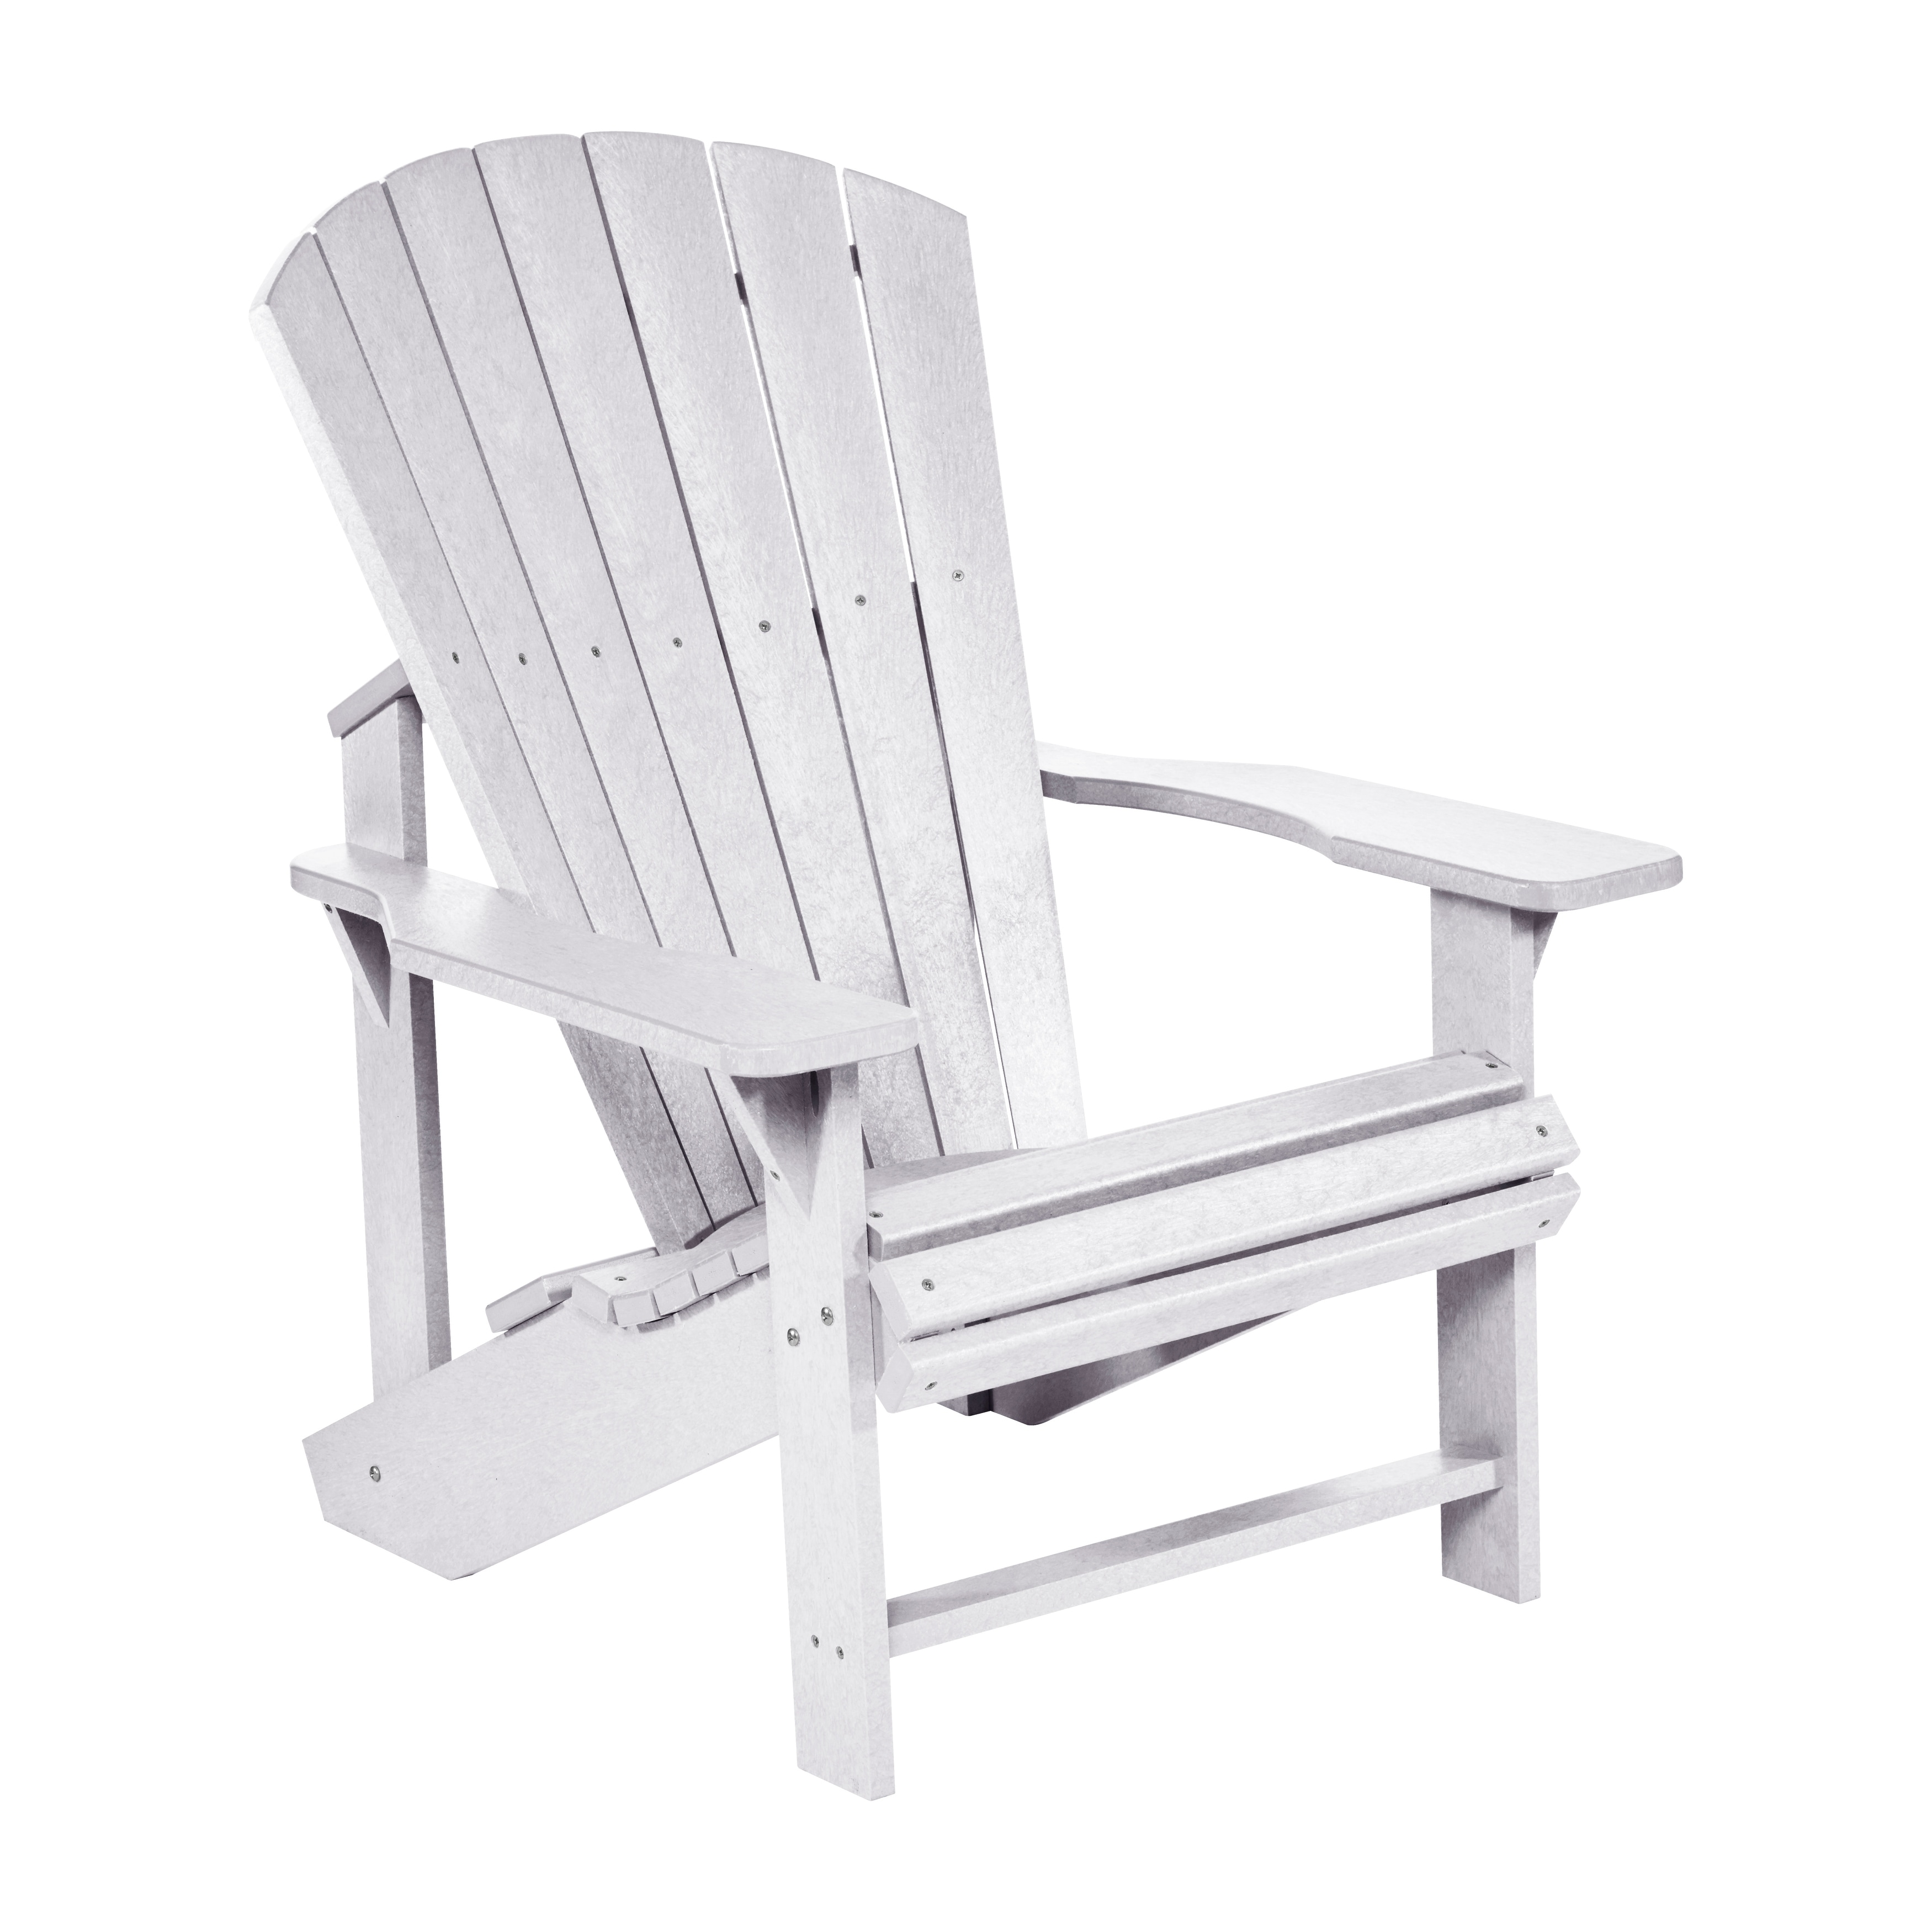 C.r. Plastics Generation Adirondack Chair